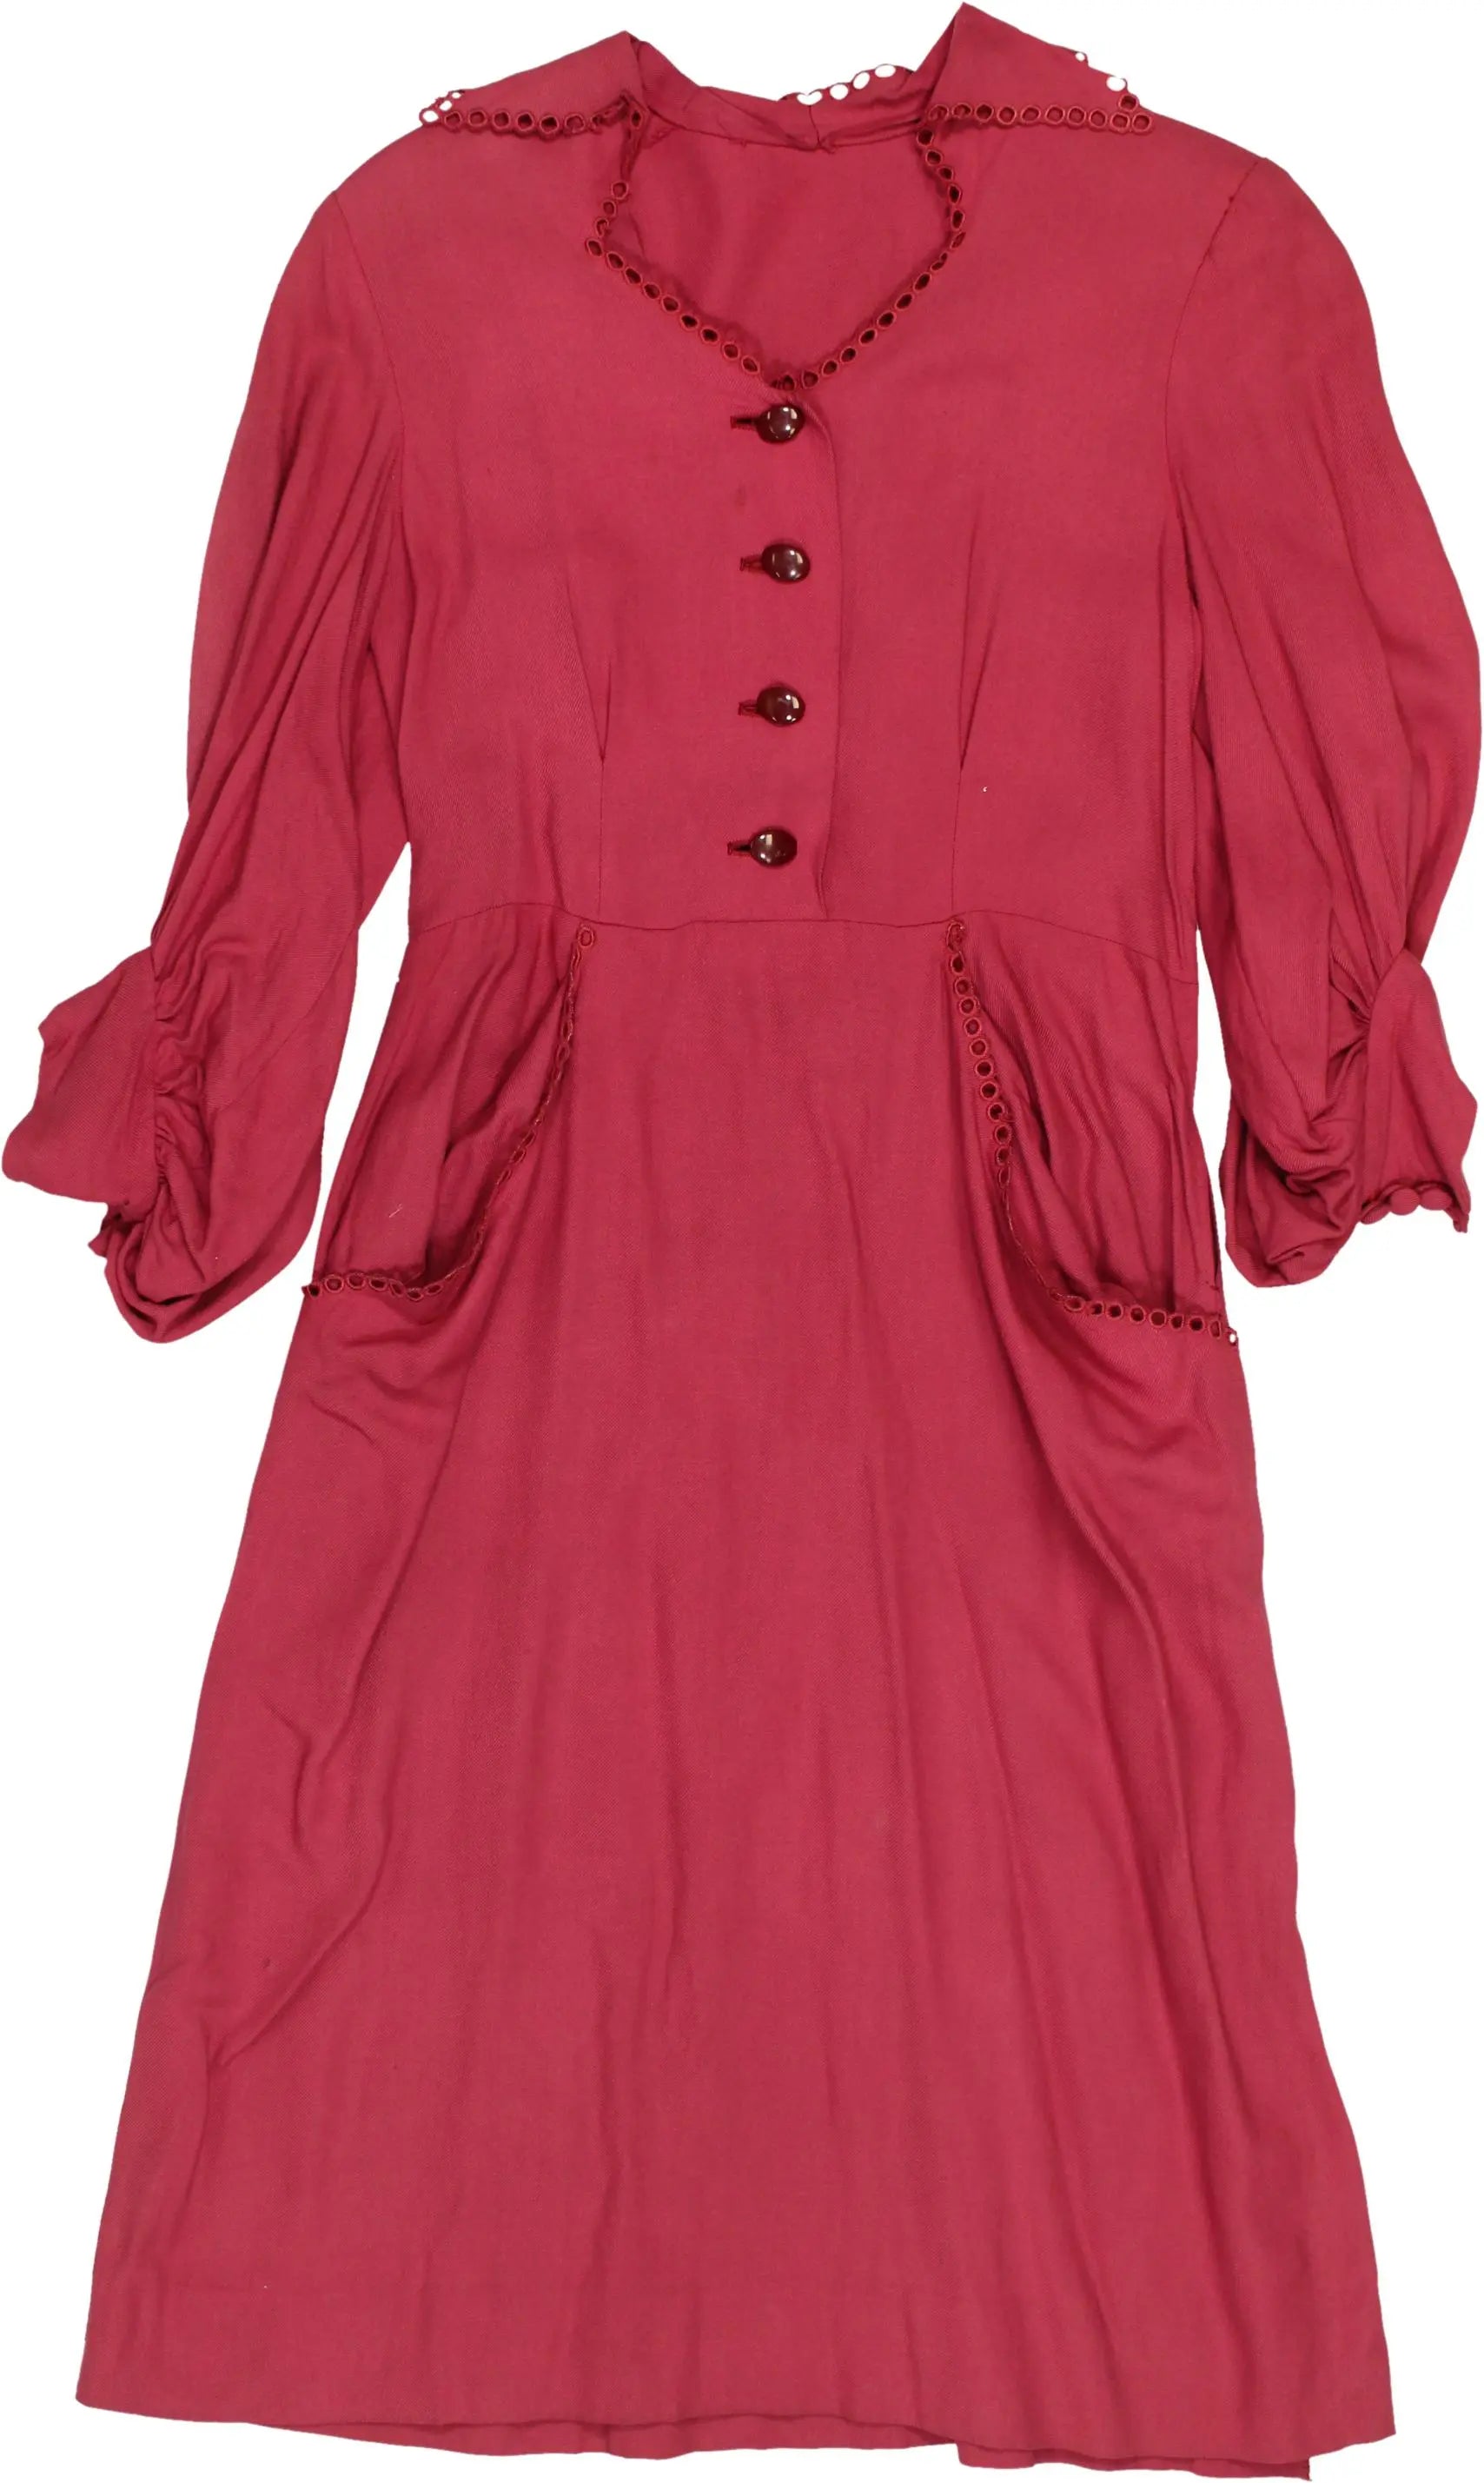 Handmade - Handmade 40s Dress- ThriftTale.com - Vintage and second handclothing